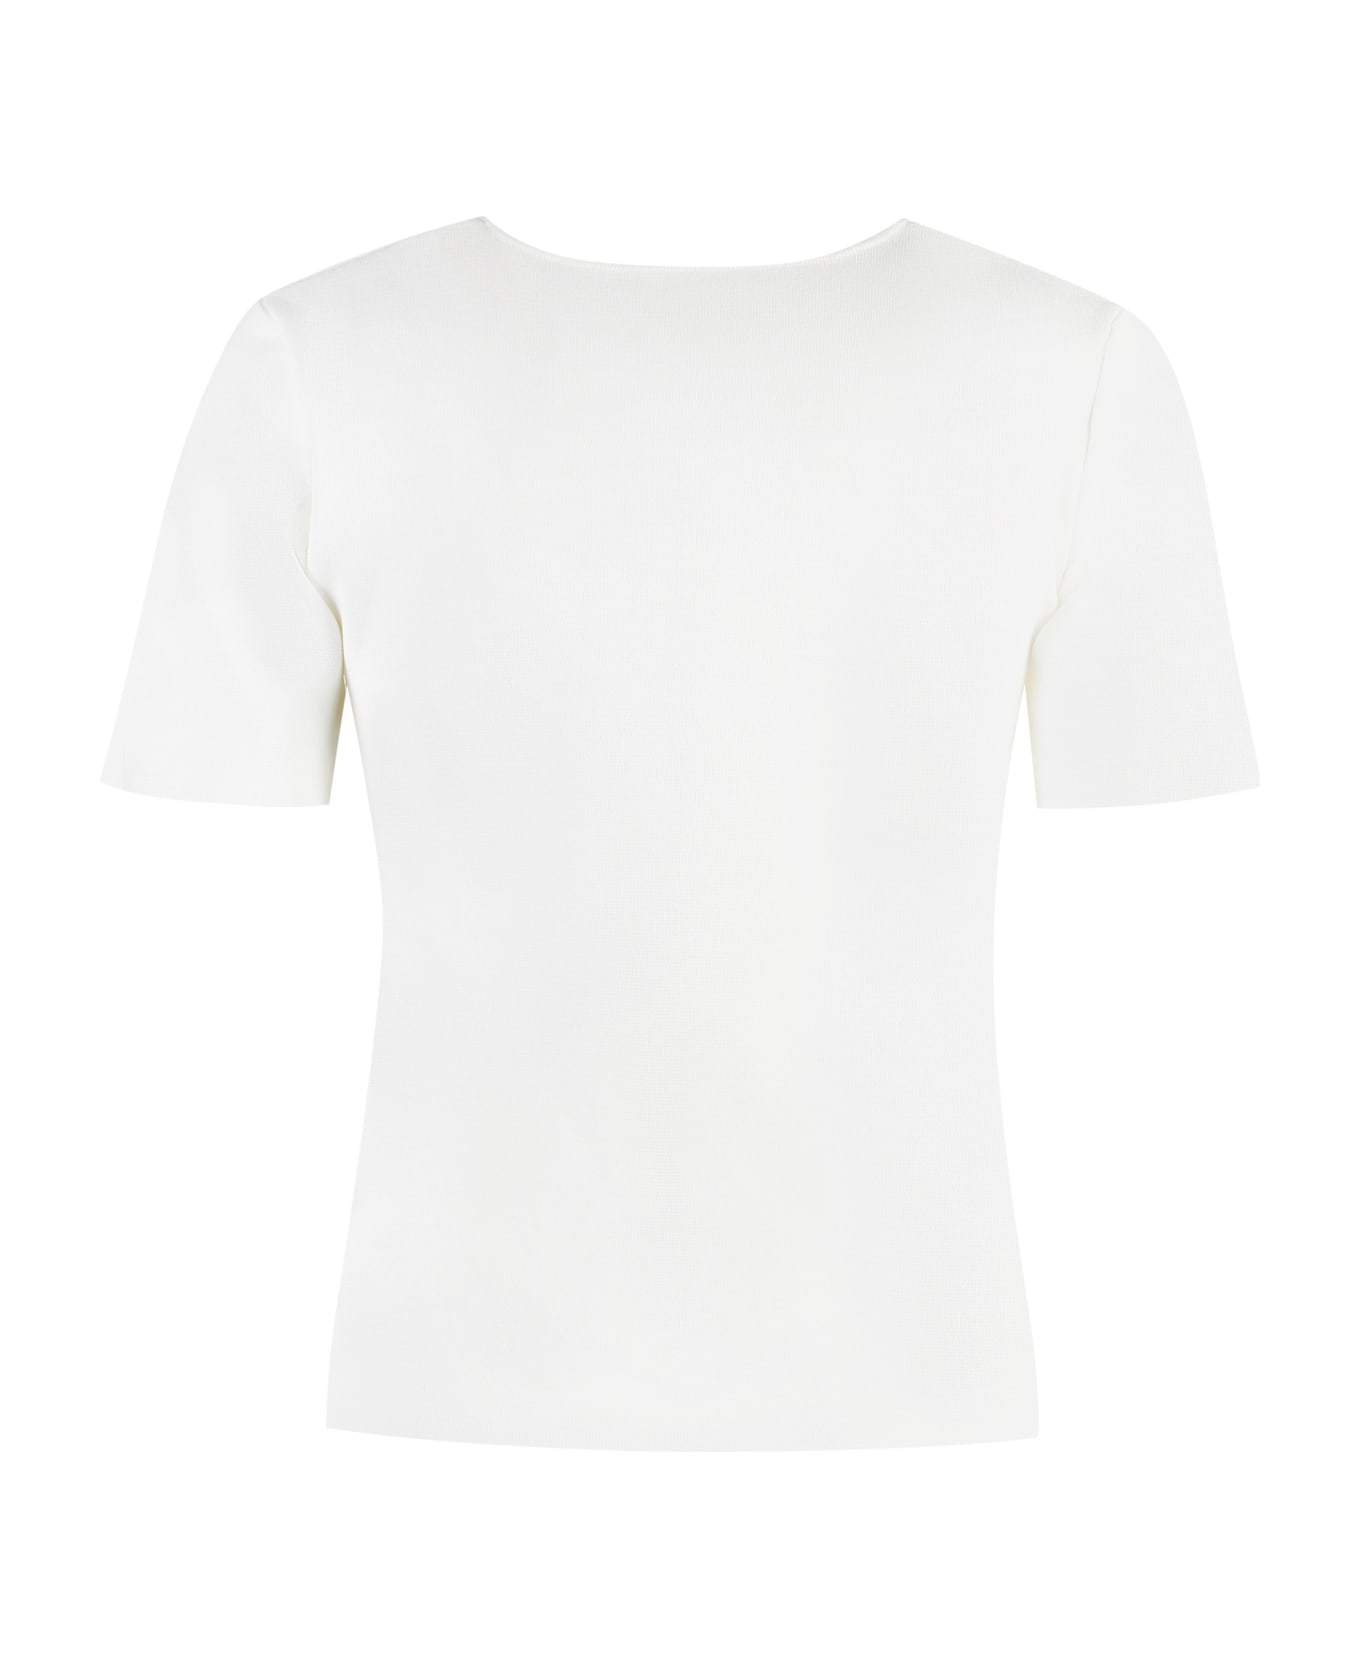 Parosh Knitted T-shirt - White Tシャツ